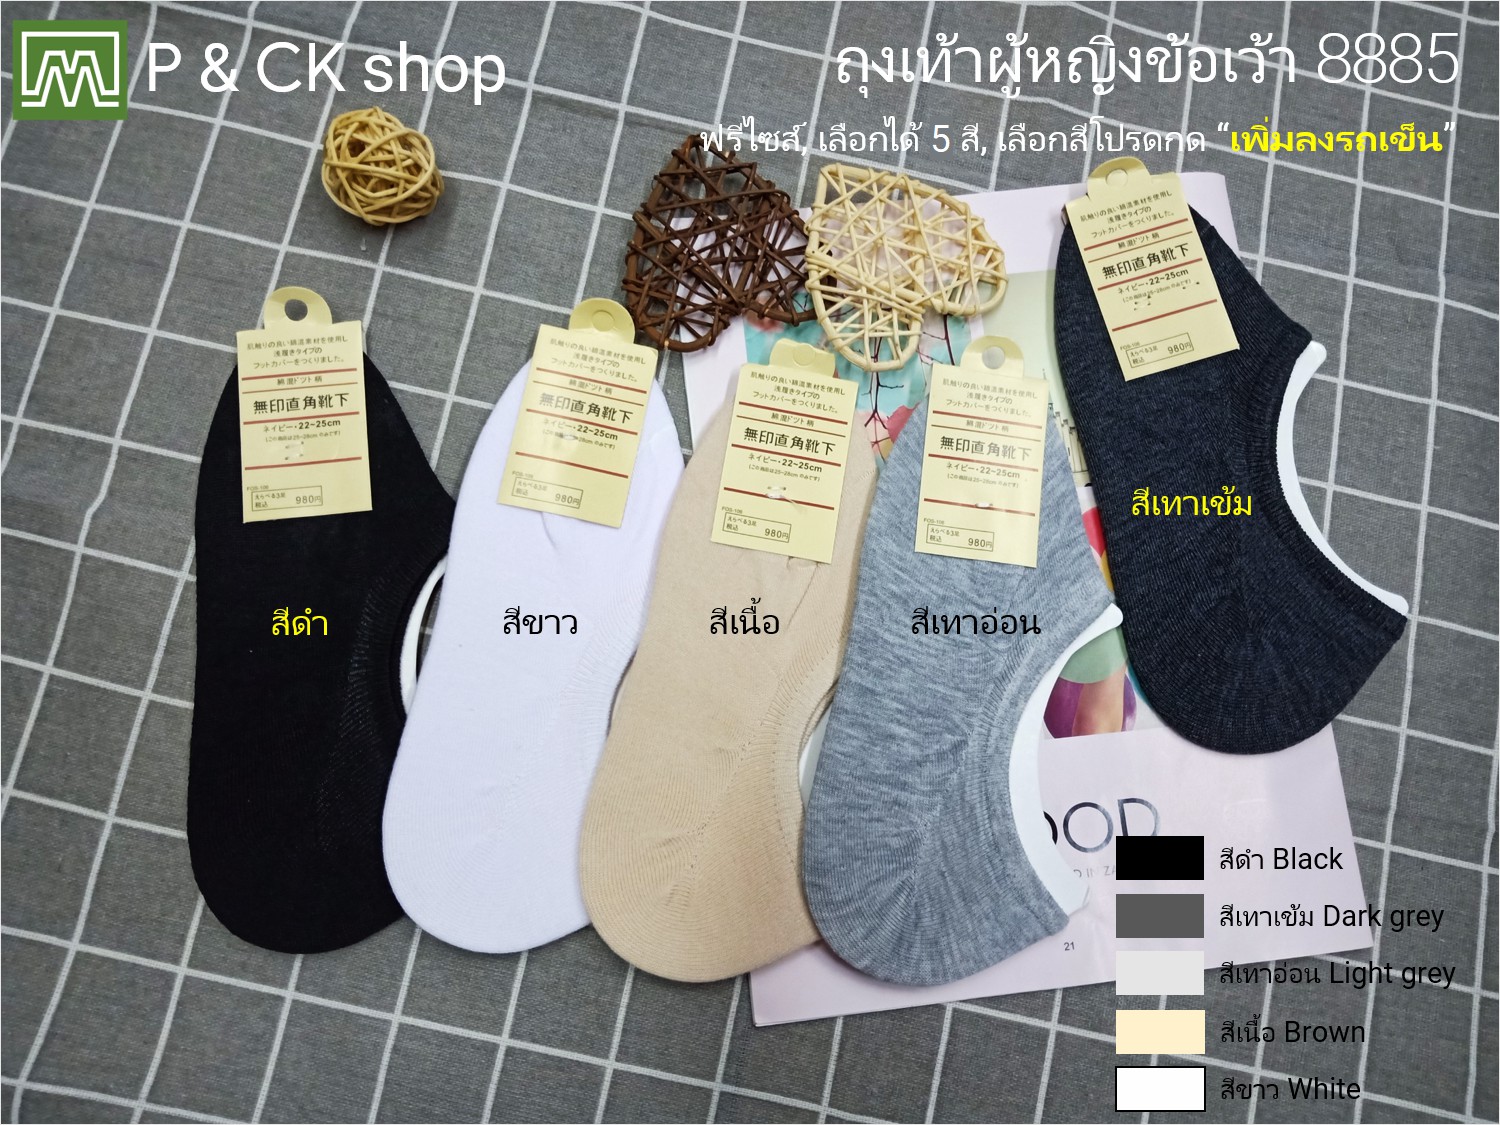 P & CK / ถุงเท้าผู้หญิงข้อเว้าฟรีไซส์ #8885 [ขายเป็นคู่]: สีพื้น, เลือกได้ 5 สี, กรุณาเลือกให้ดี [เลือกสีโปรดกด "เพิ่มลงรถเข็น"]